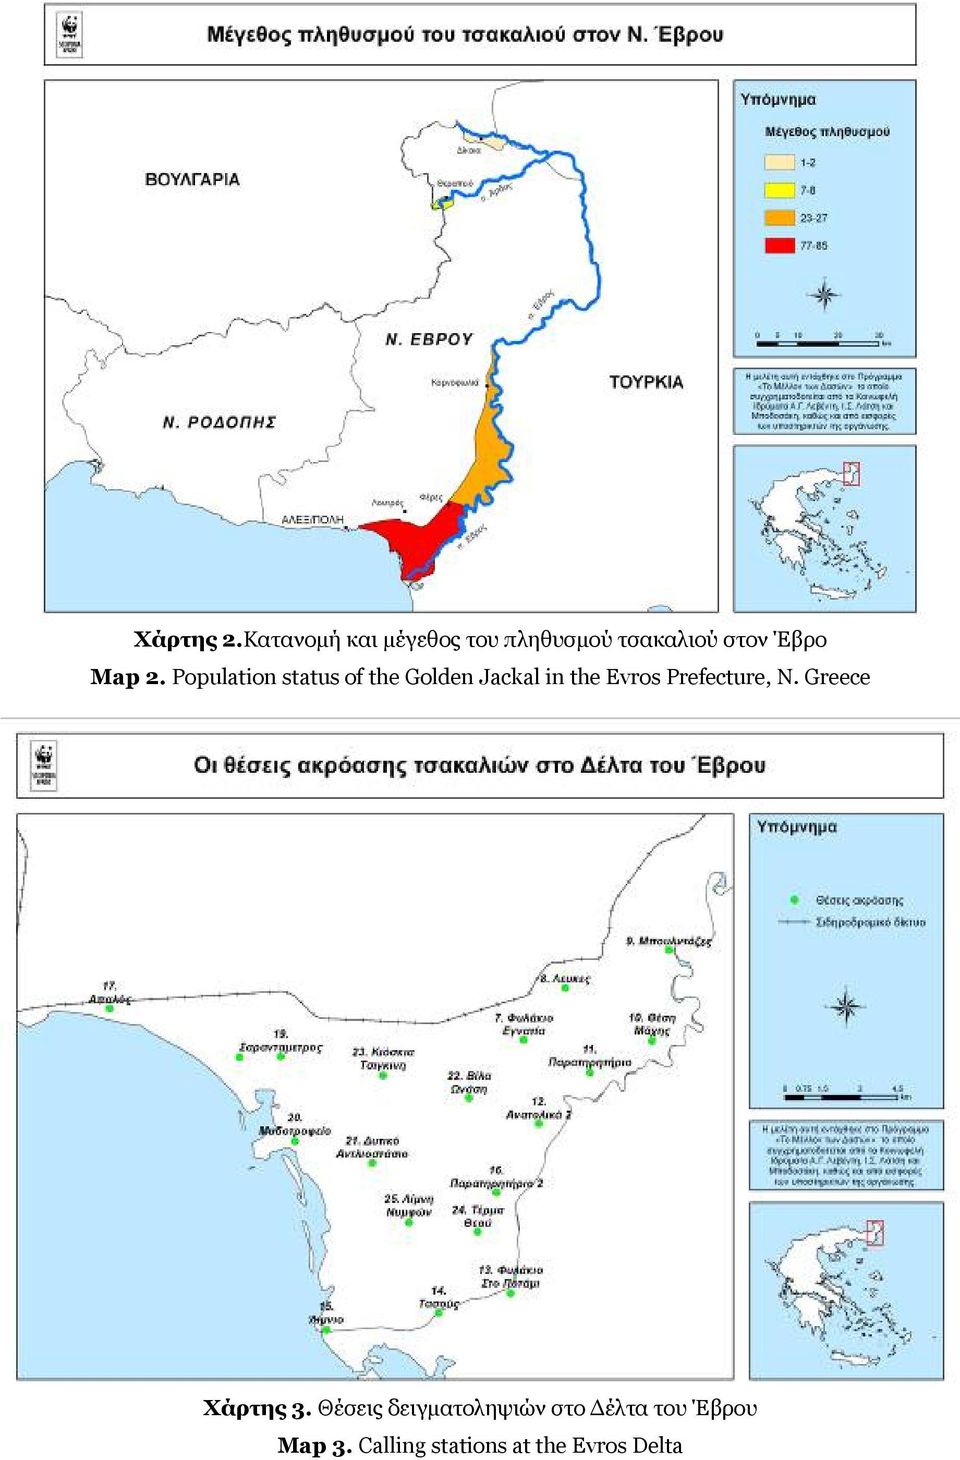 2. Population status of the Golden Jackal in the Evros